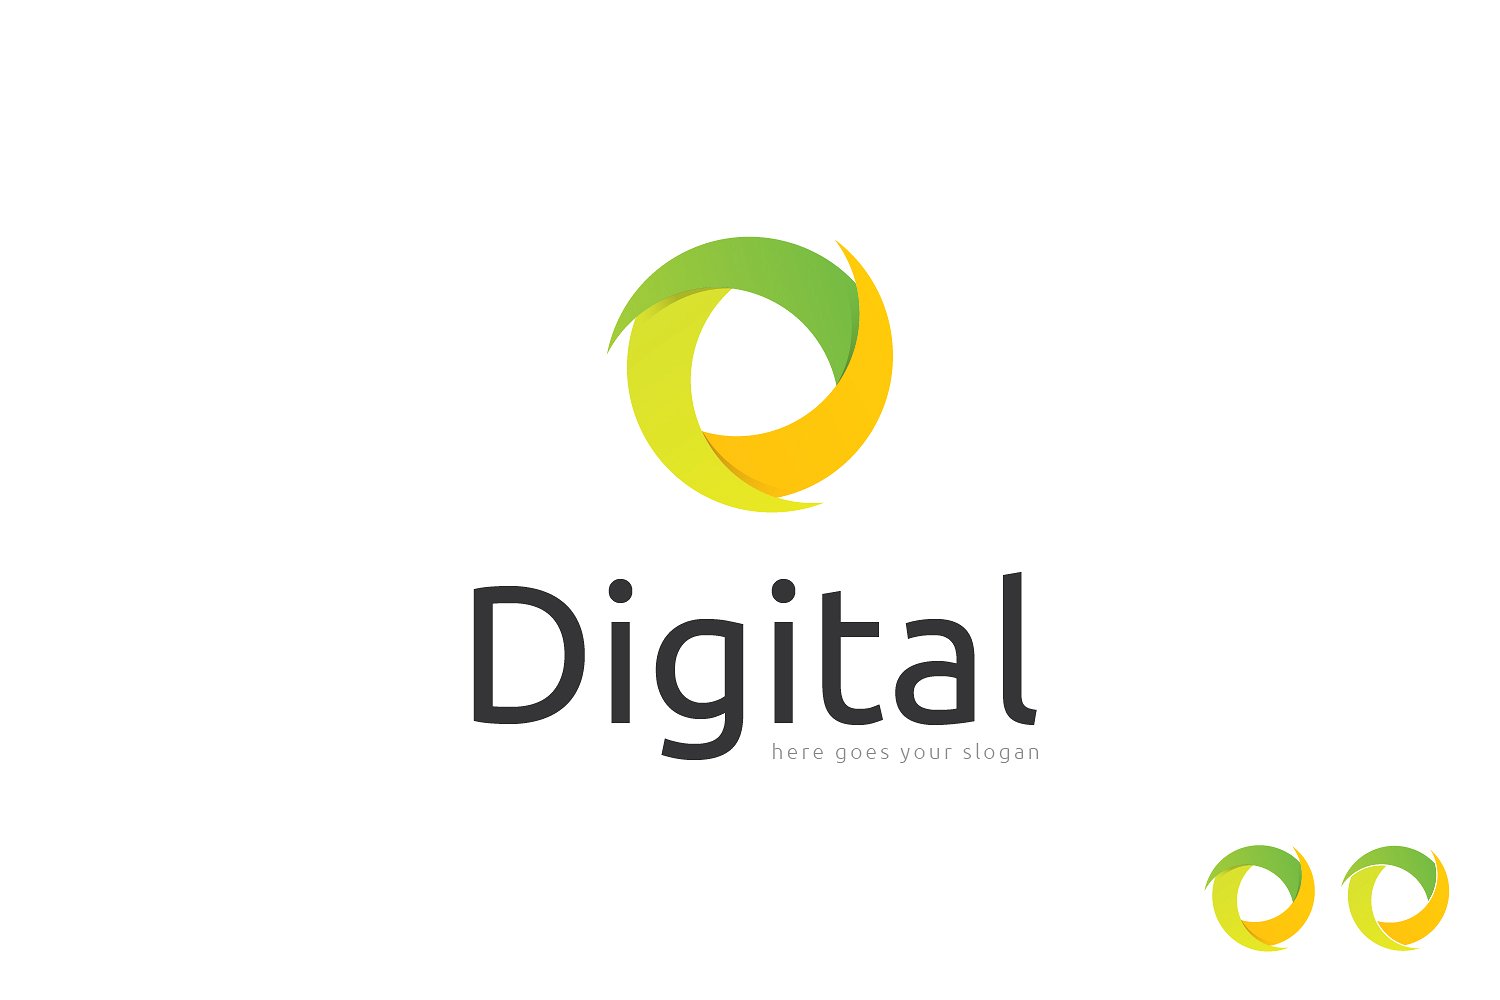 Adgital Logo photo - 1